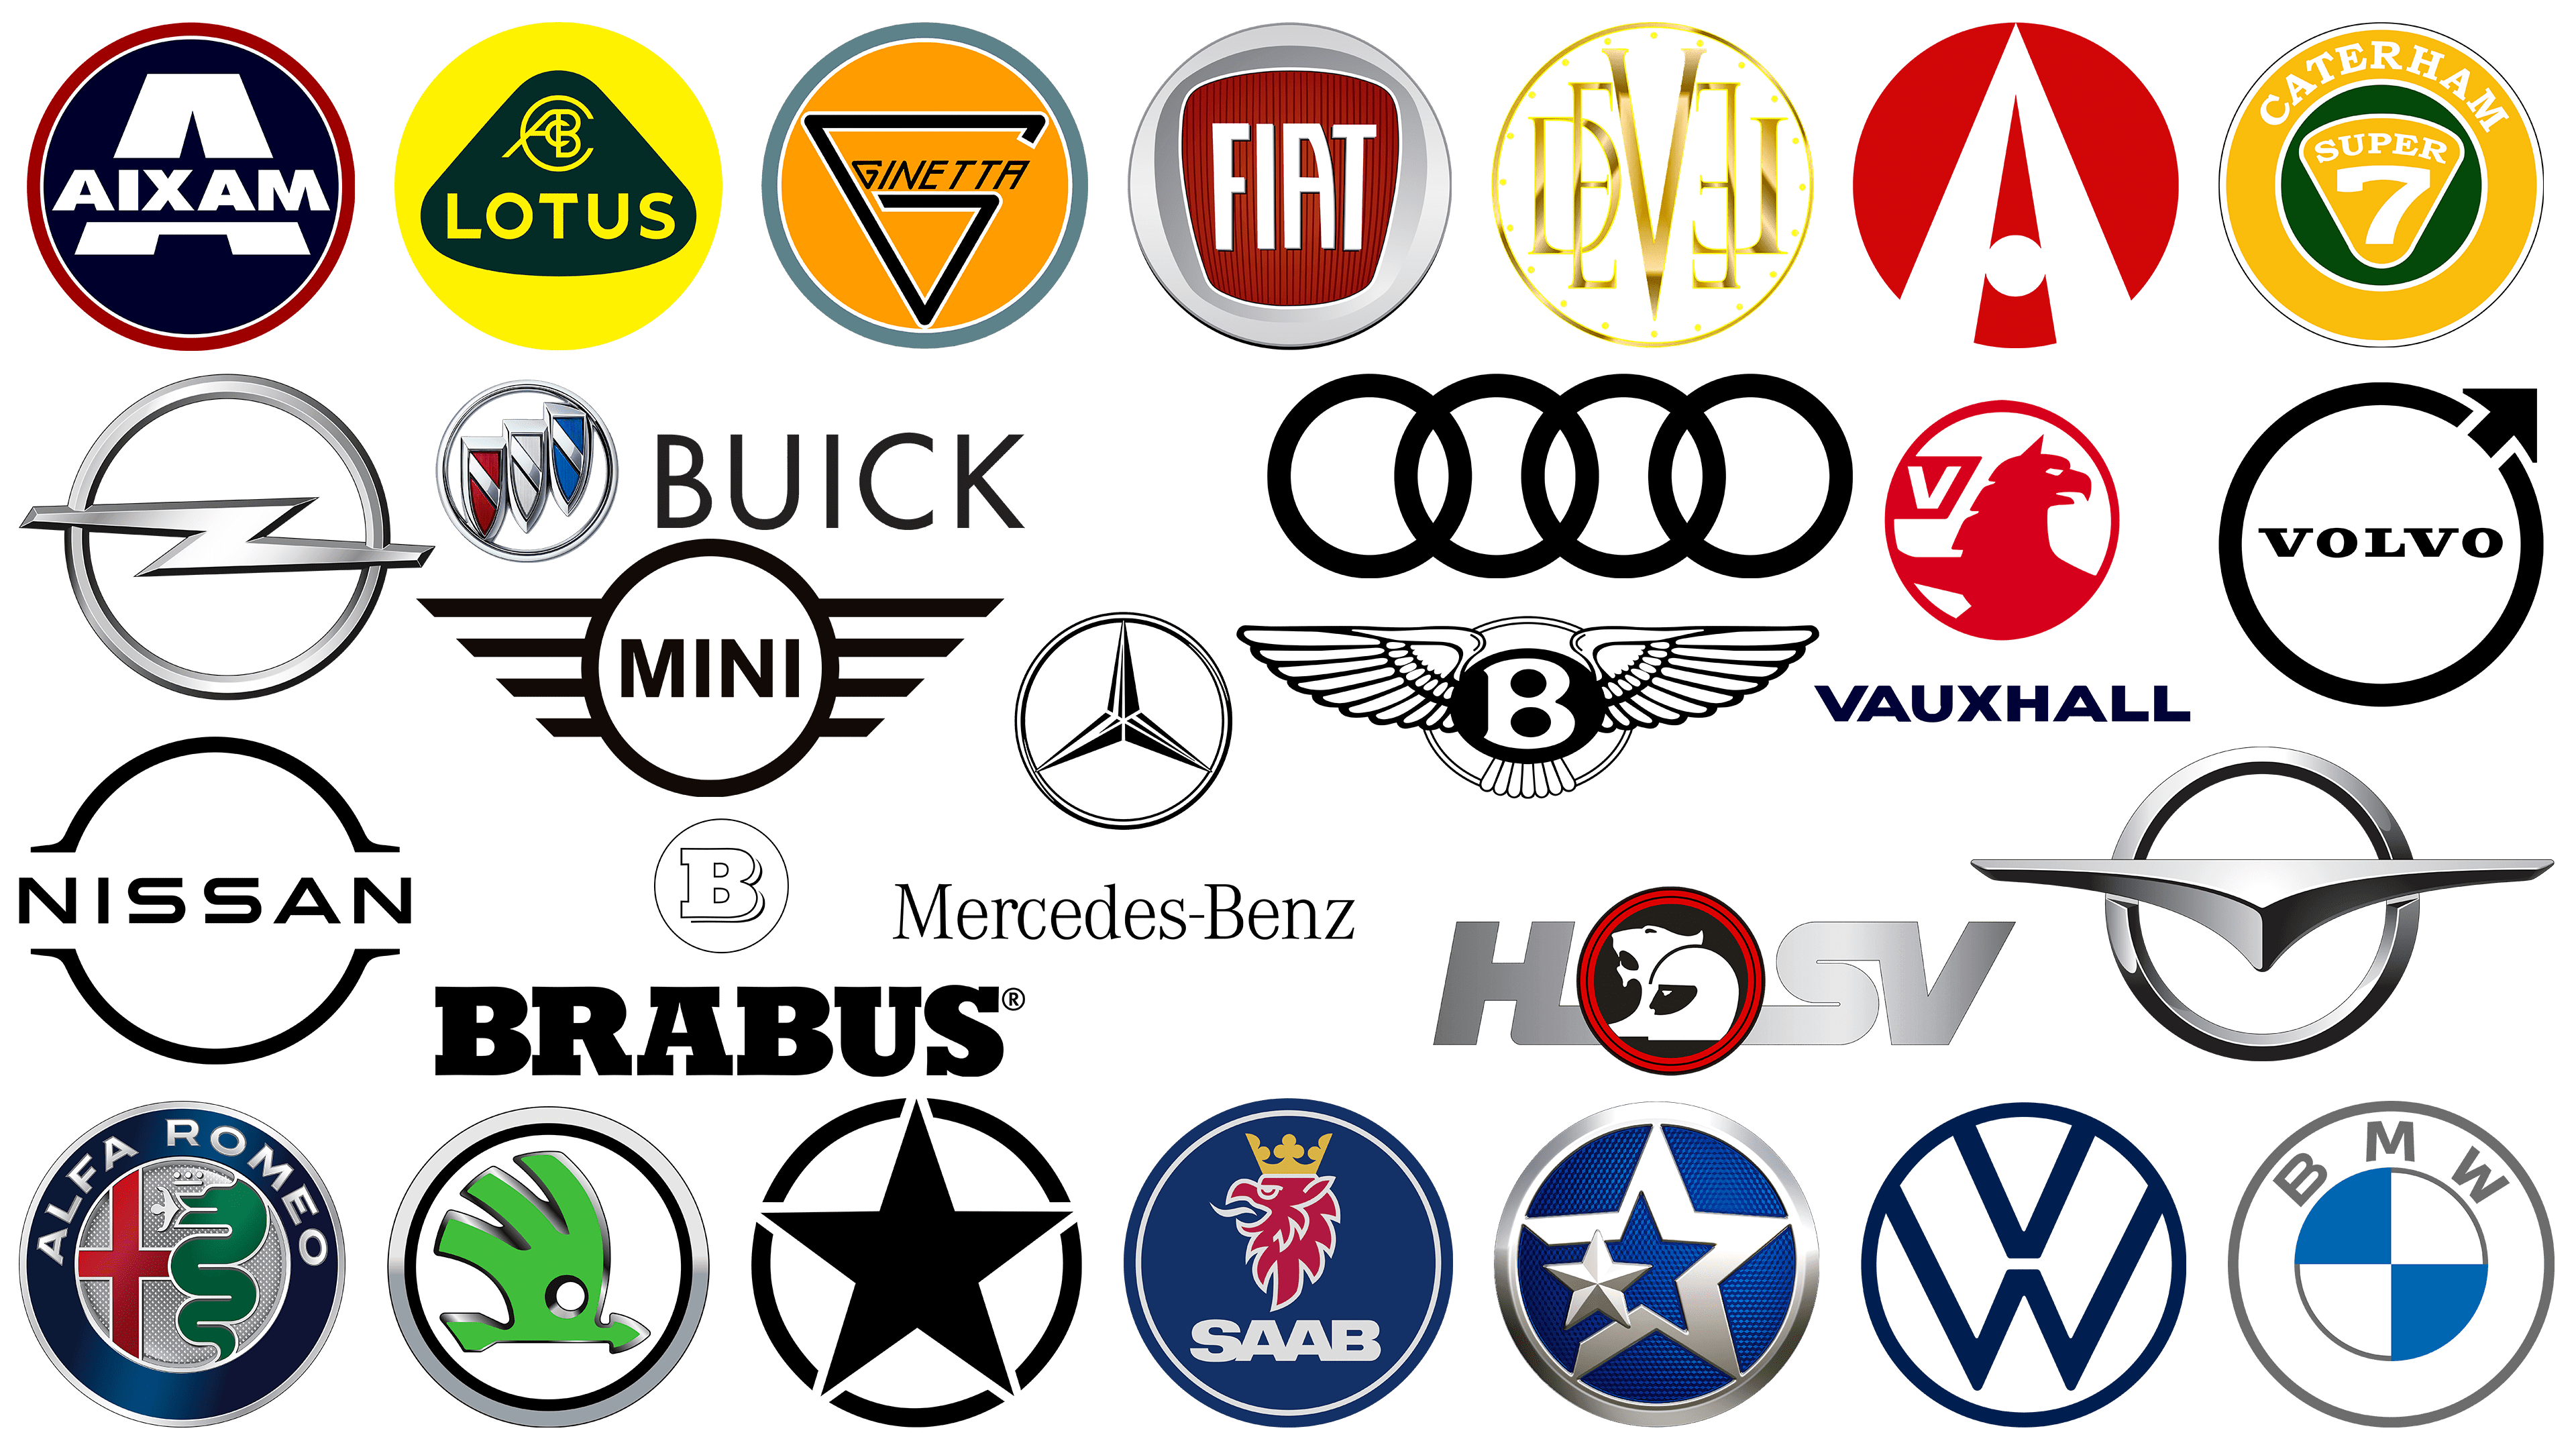 Emblems and logo